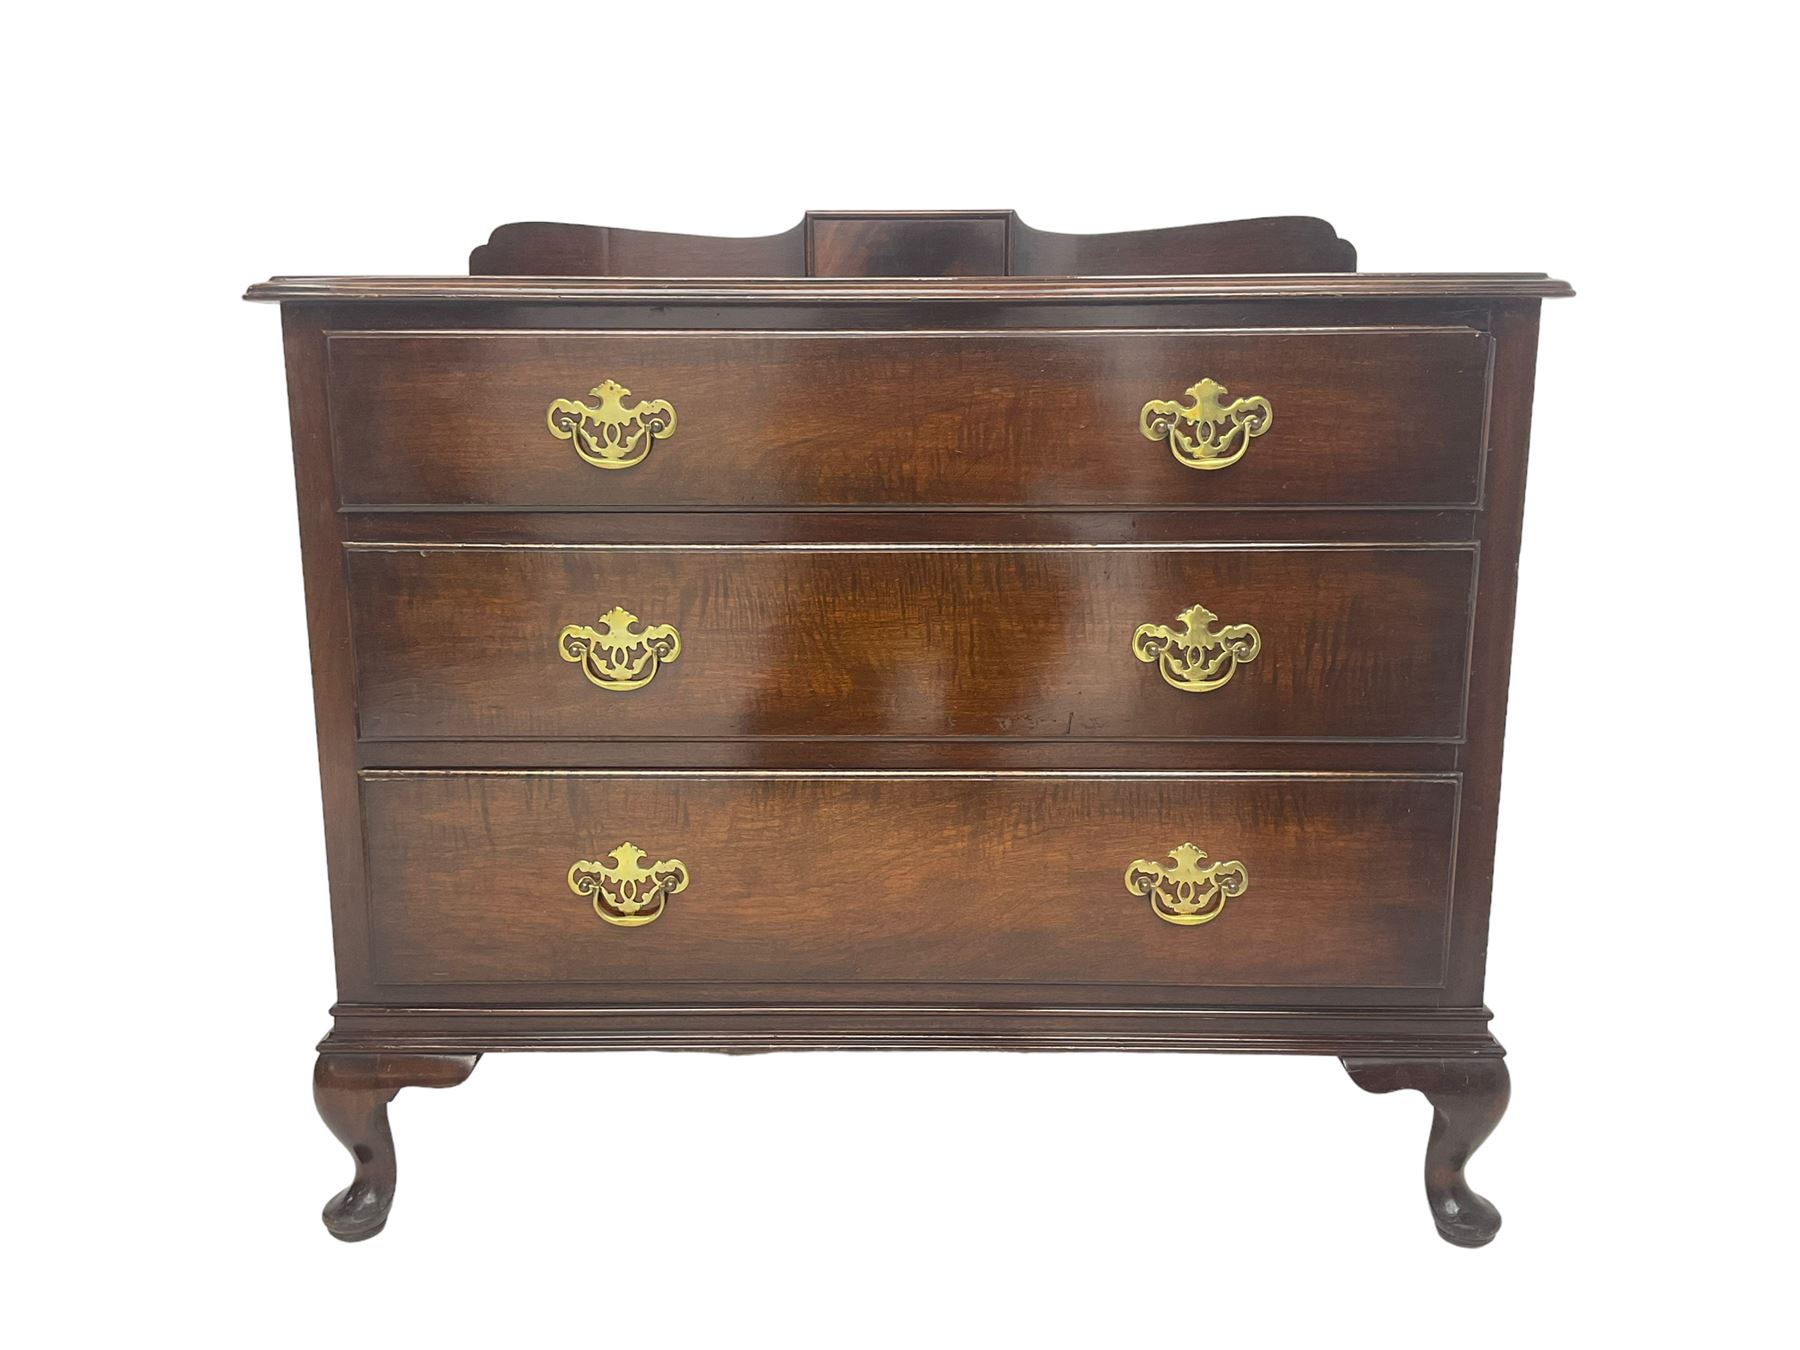 Waring & Gillow - Georgian design mahogany chest